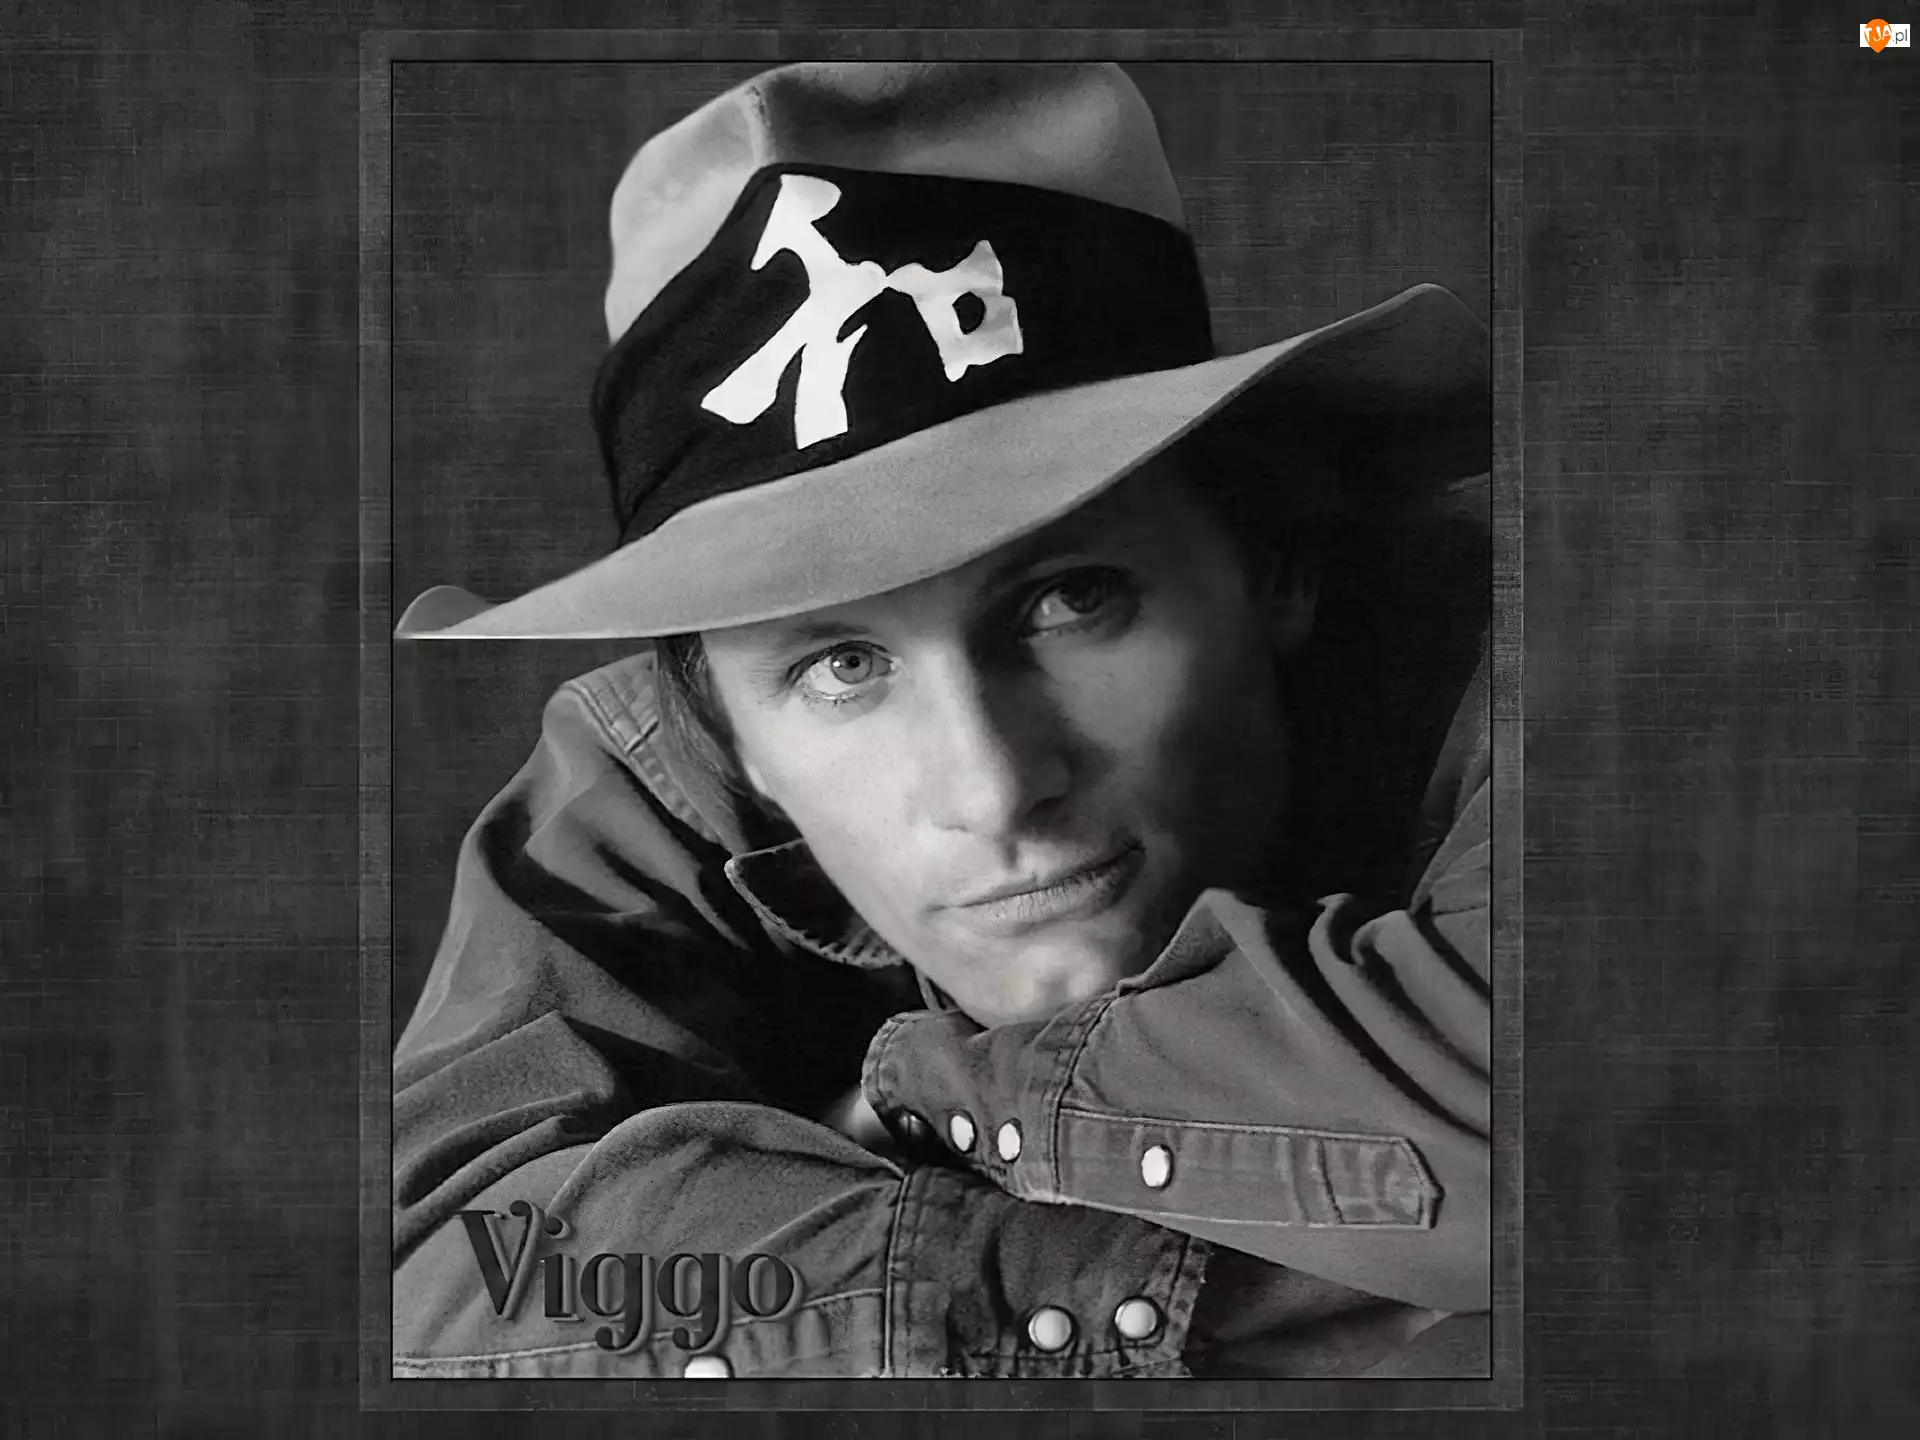 kapelusz, Viggo Mortensen